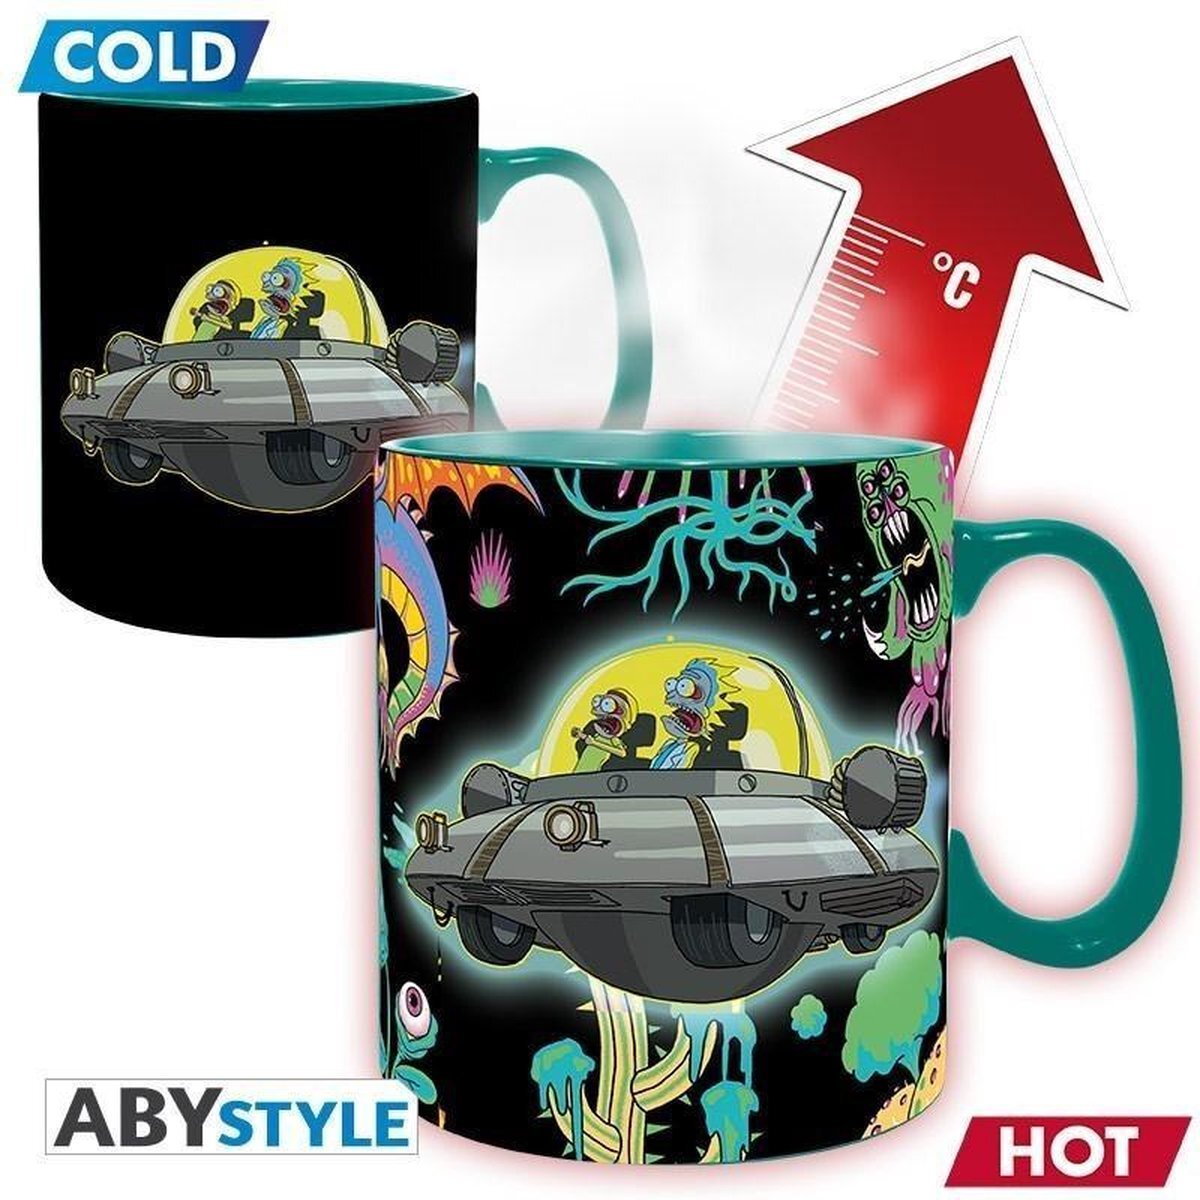 Abystyle Rick and Morty Heat Change Mug